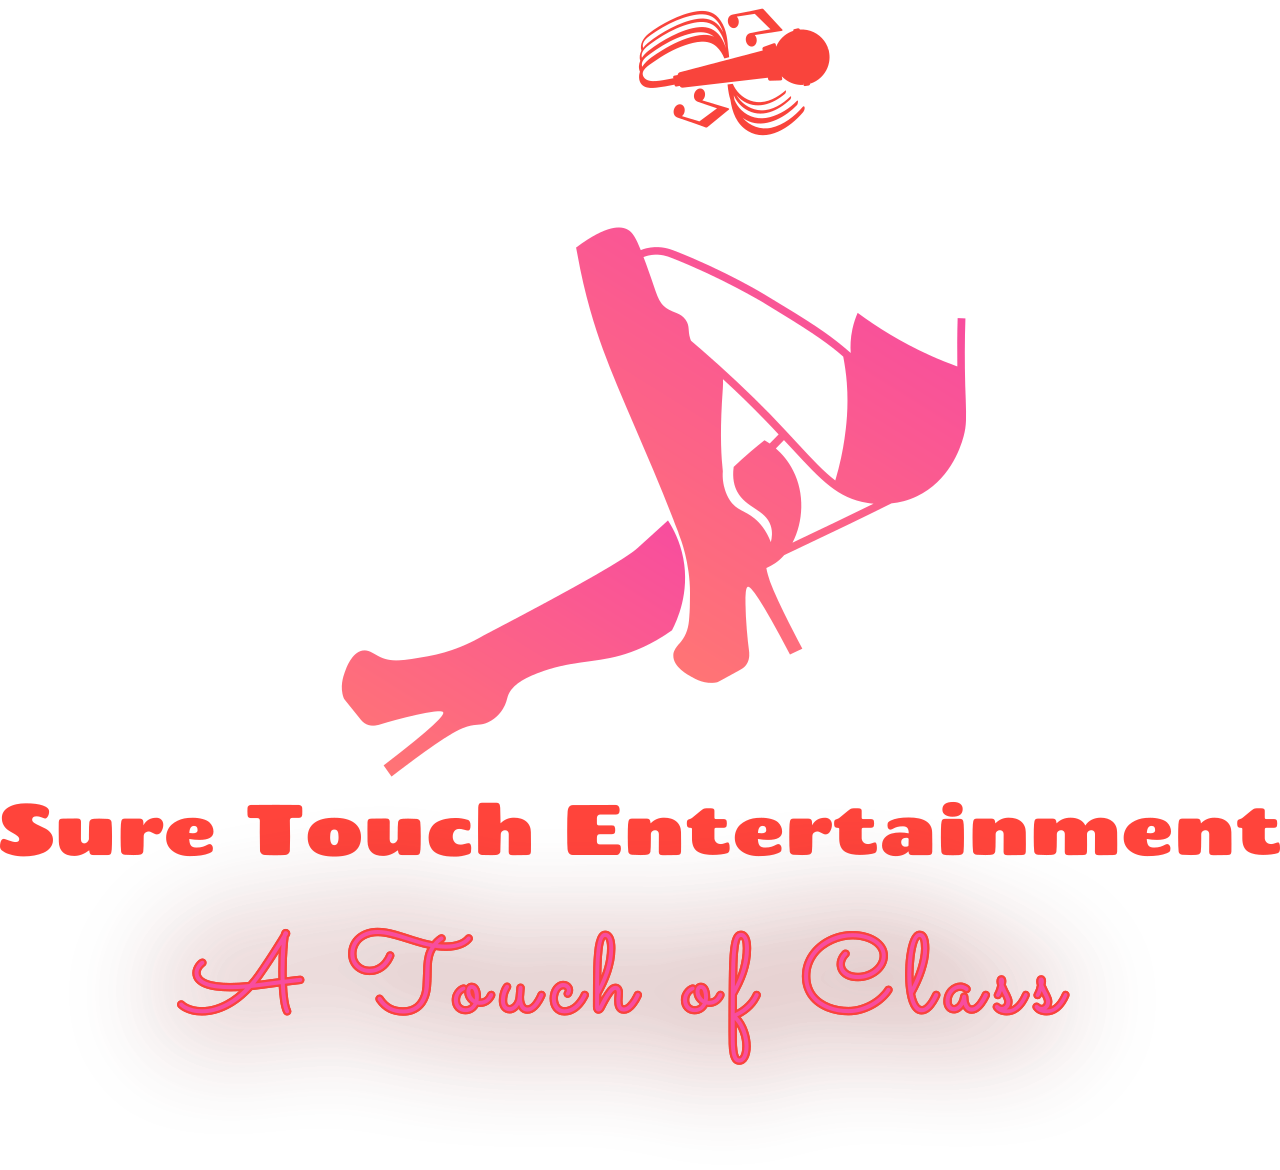 Sure Touch Entertainment 's web page